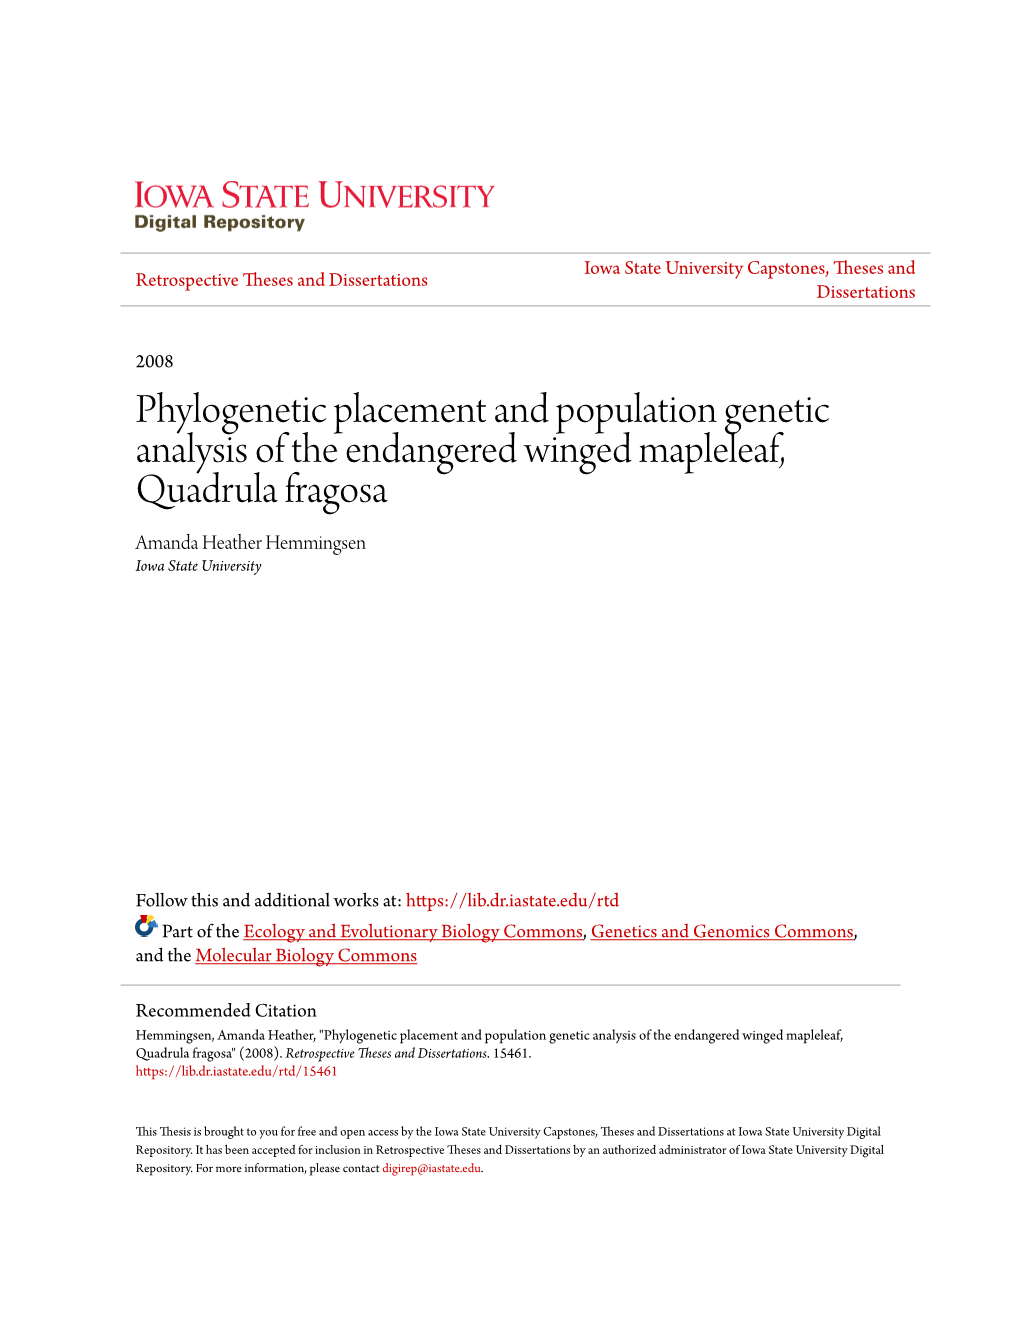 Phylogenetic Placement and Population Genetic Analysis of the Endangered Winged Mapleleaf, Quadrula Fragosa Amanda Heather Hemmingsen Iowa State University